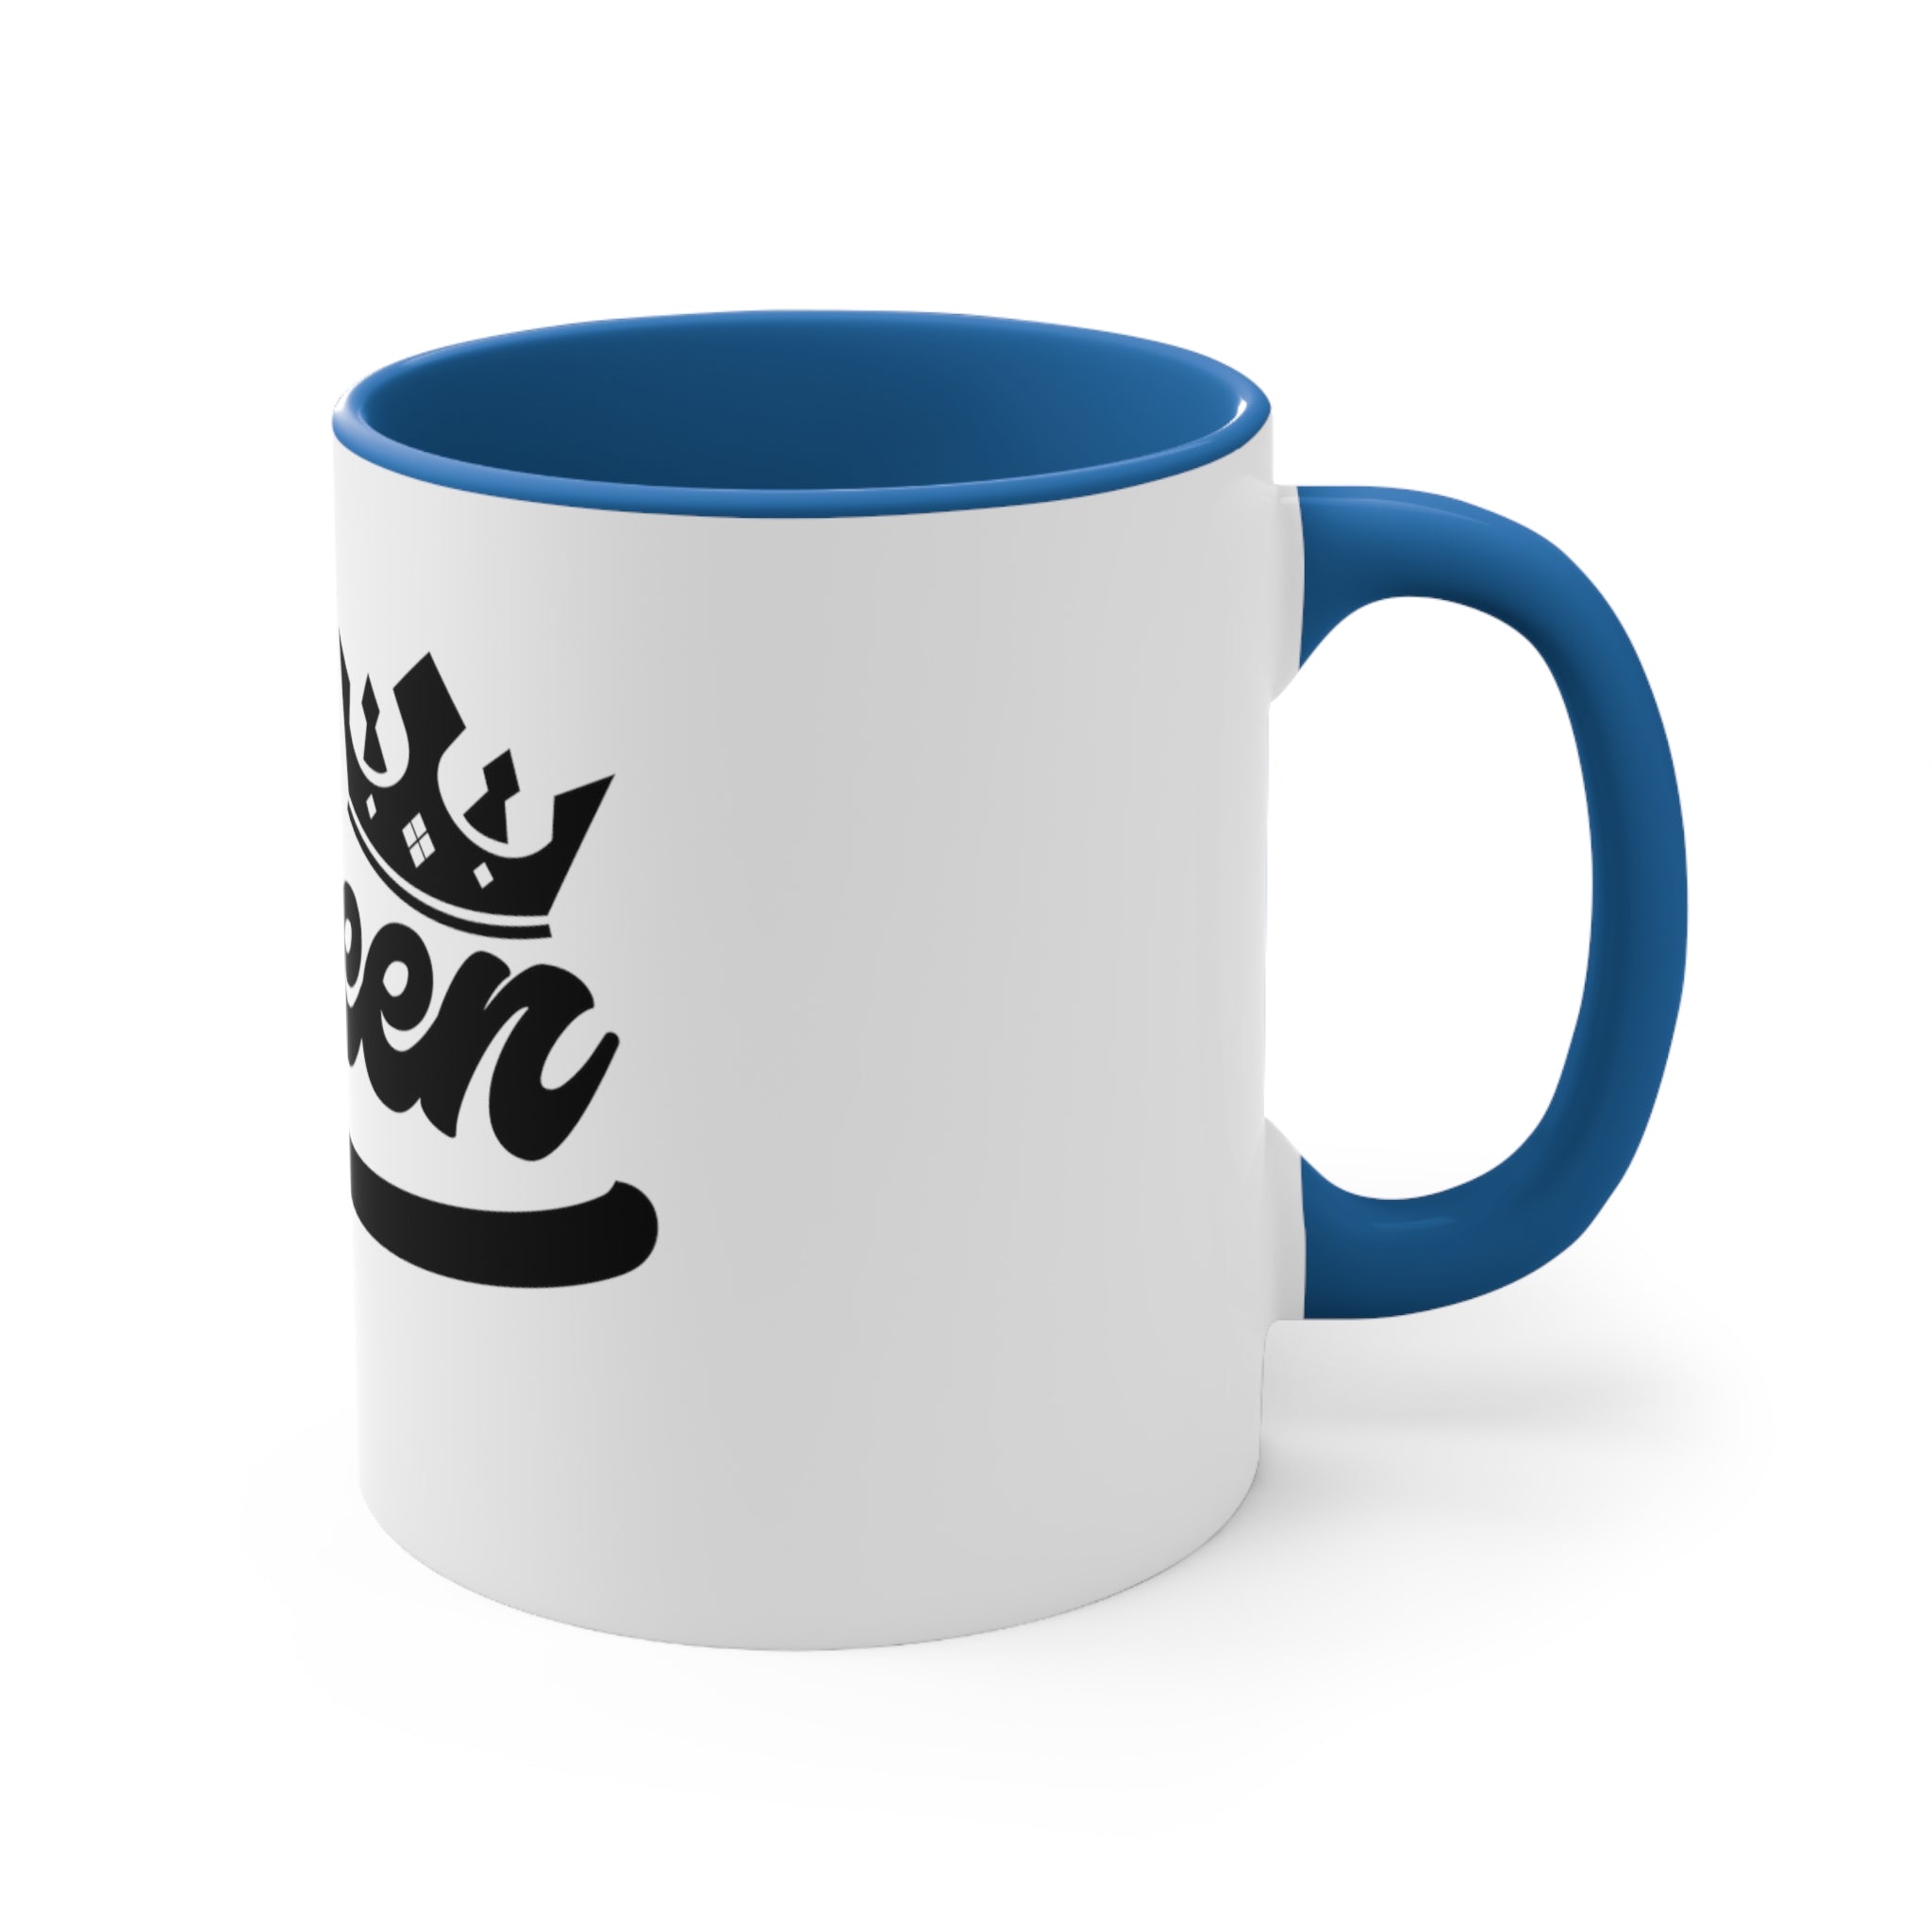 Queen Accent Coffee Mug, 11oz